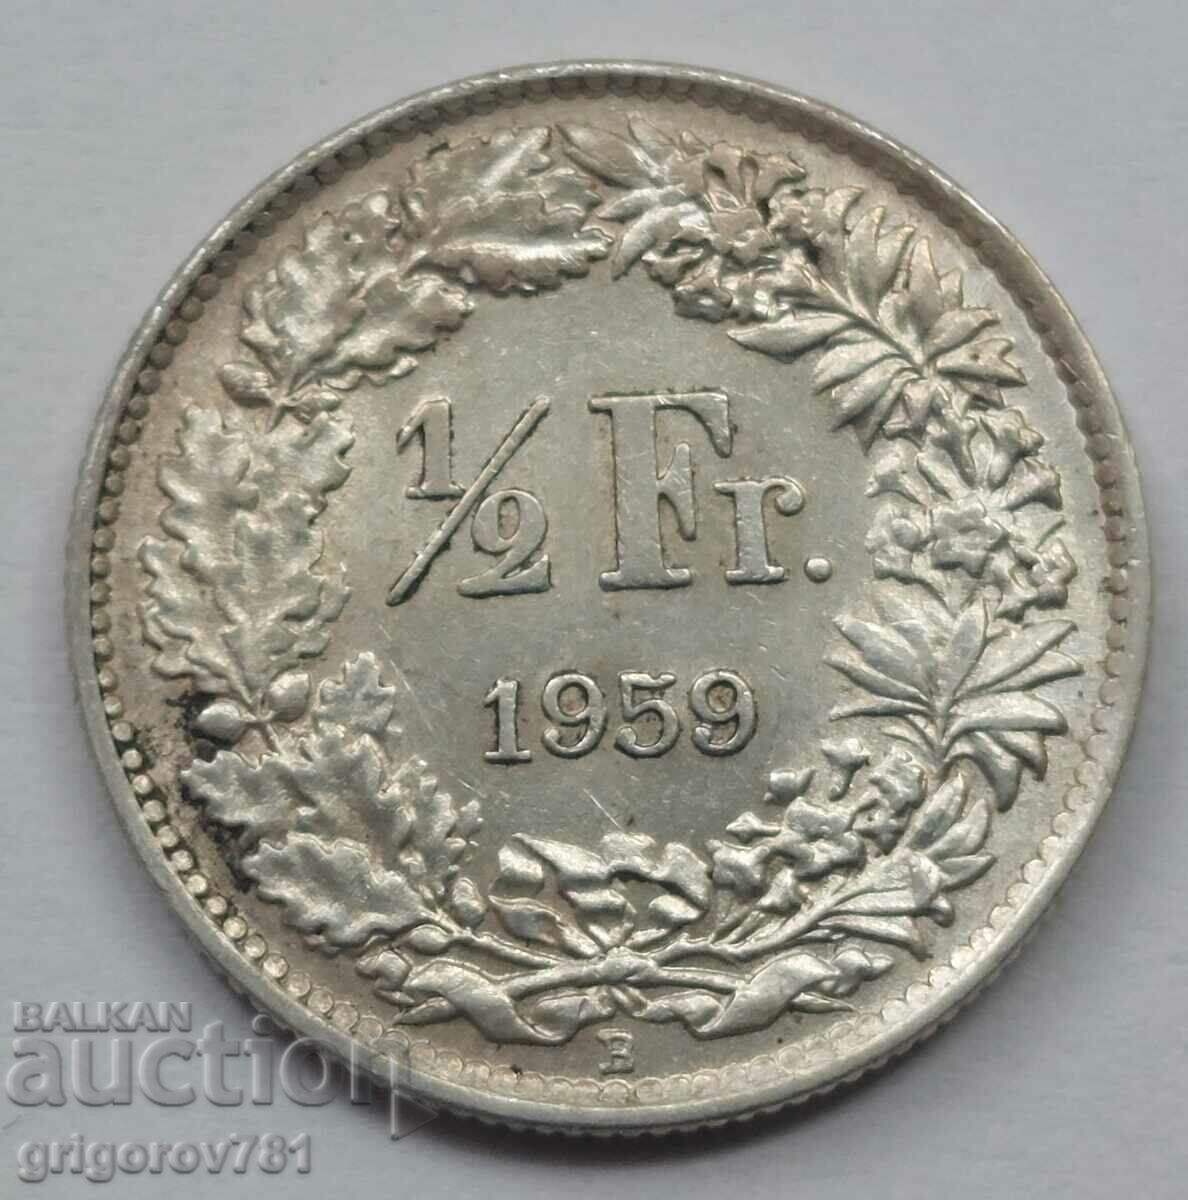 1/2 Franc Silver Switzerland 1959 B - Silver Coin #127